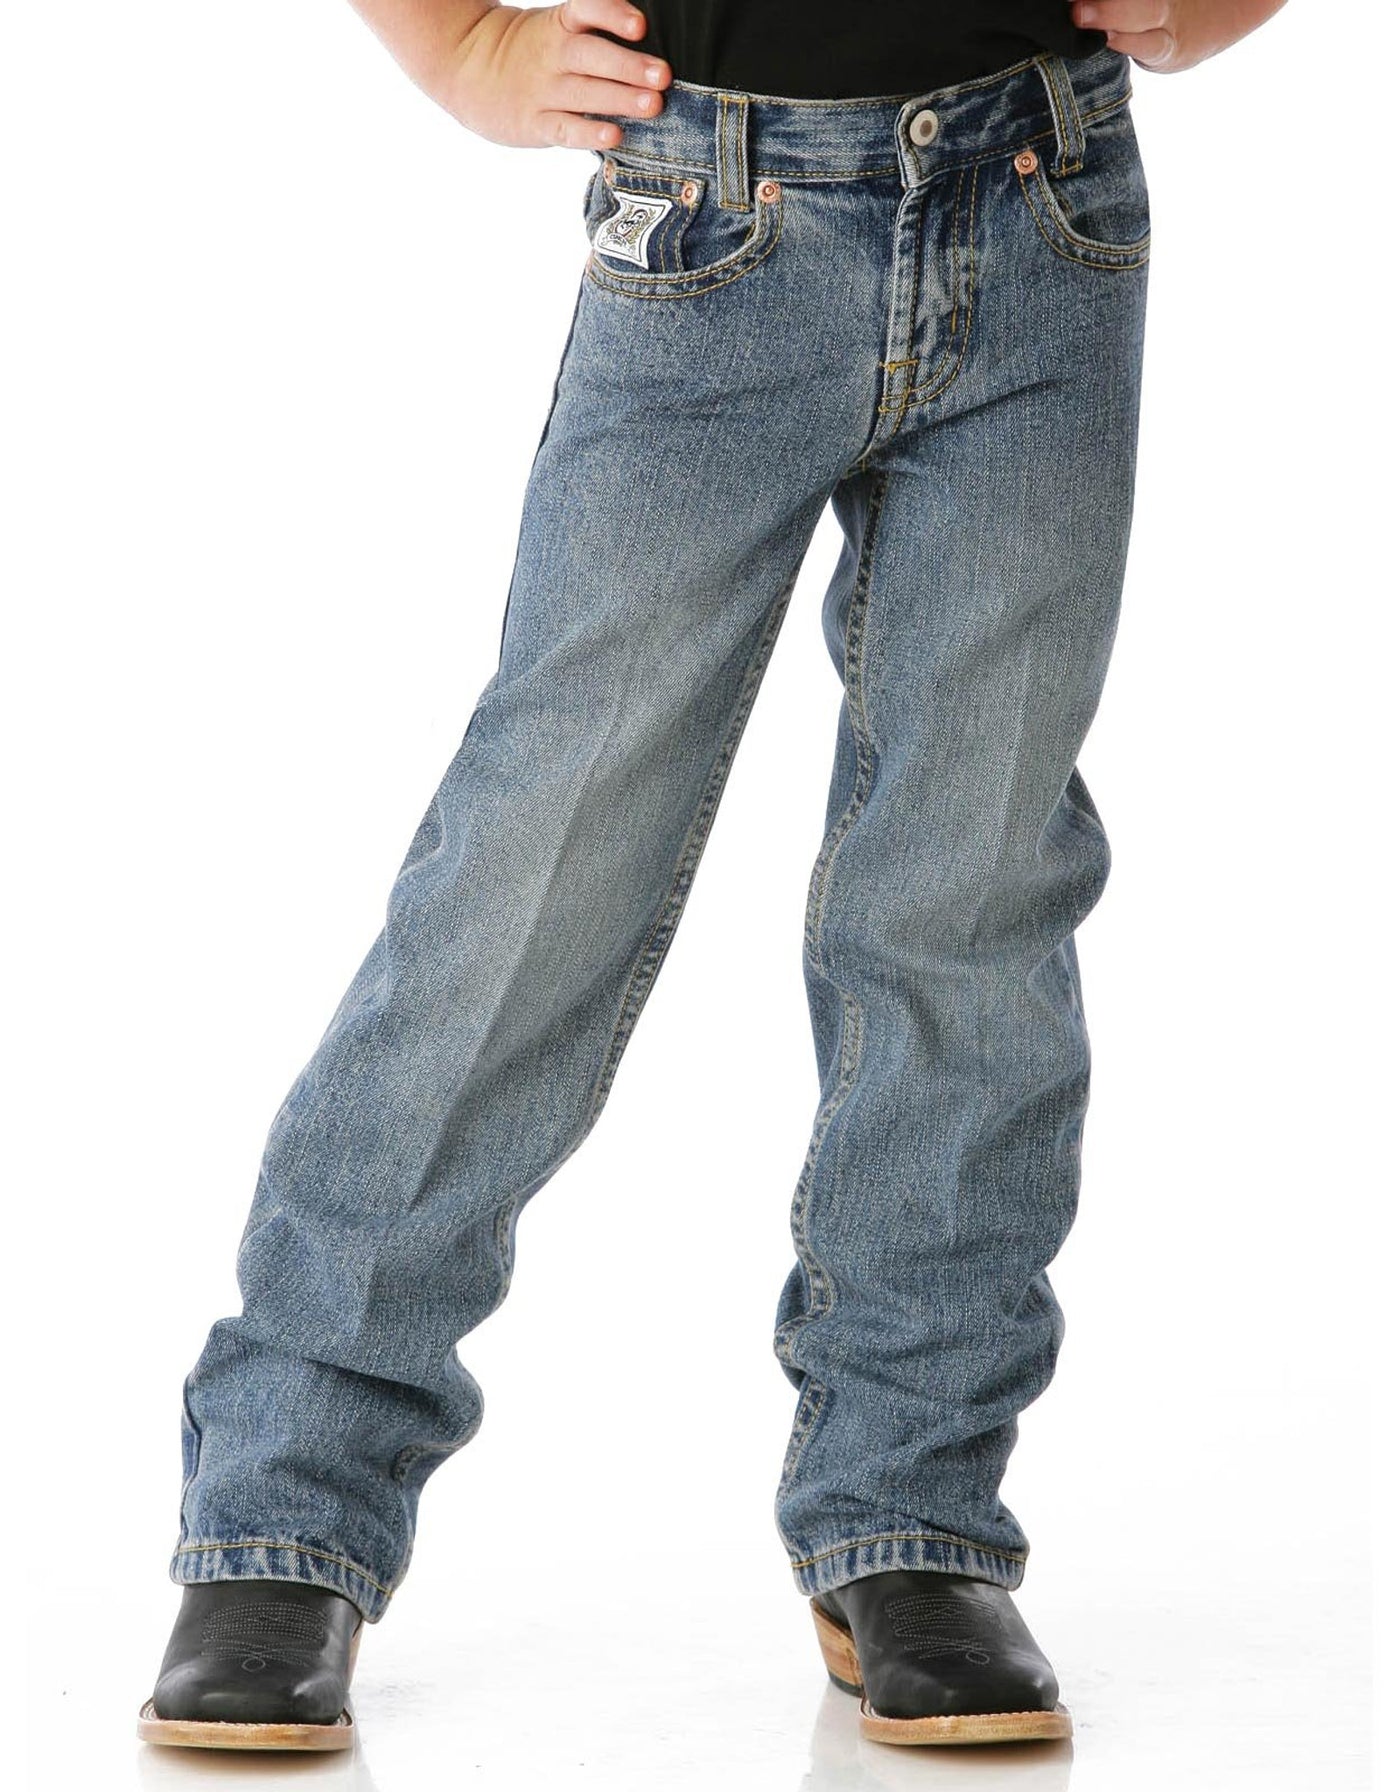 Cinch Boy's White Label Light Wash Jeans